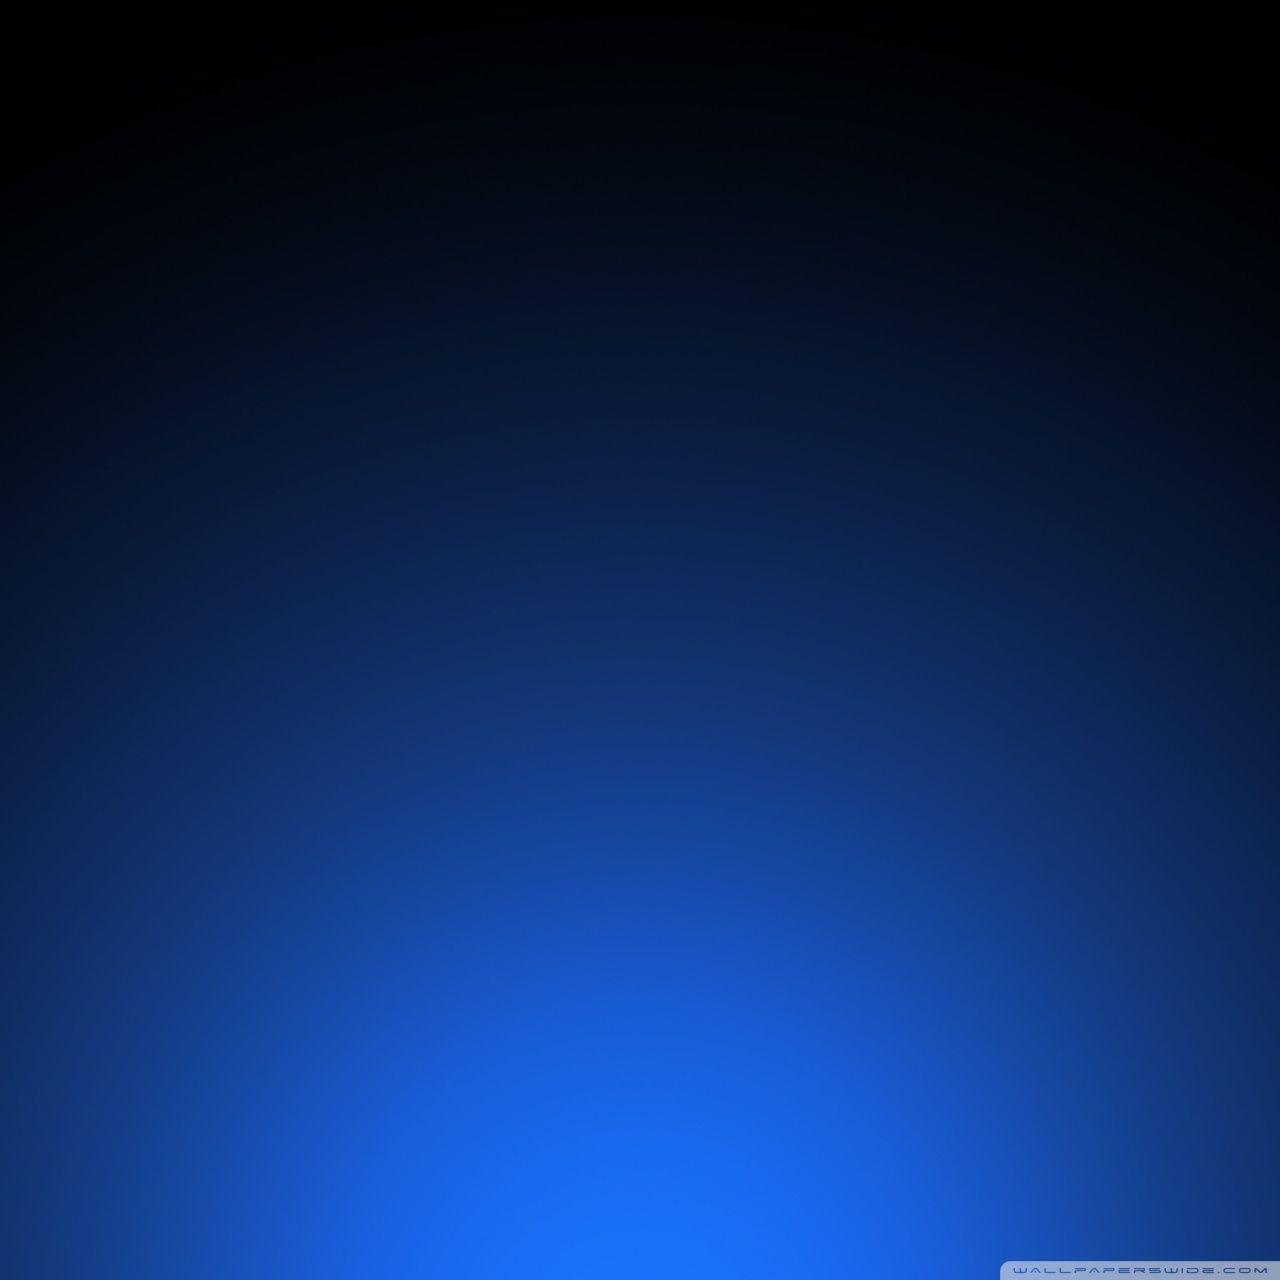 Simple Blue & Black Wallpaper Ultra HD Desktop Background